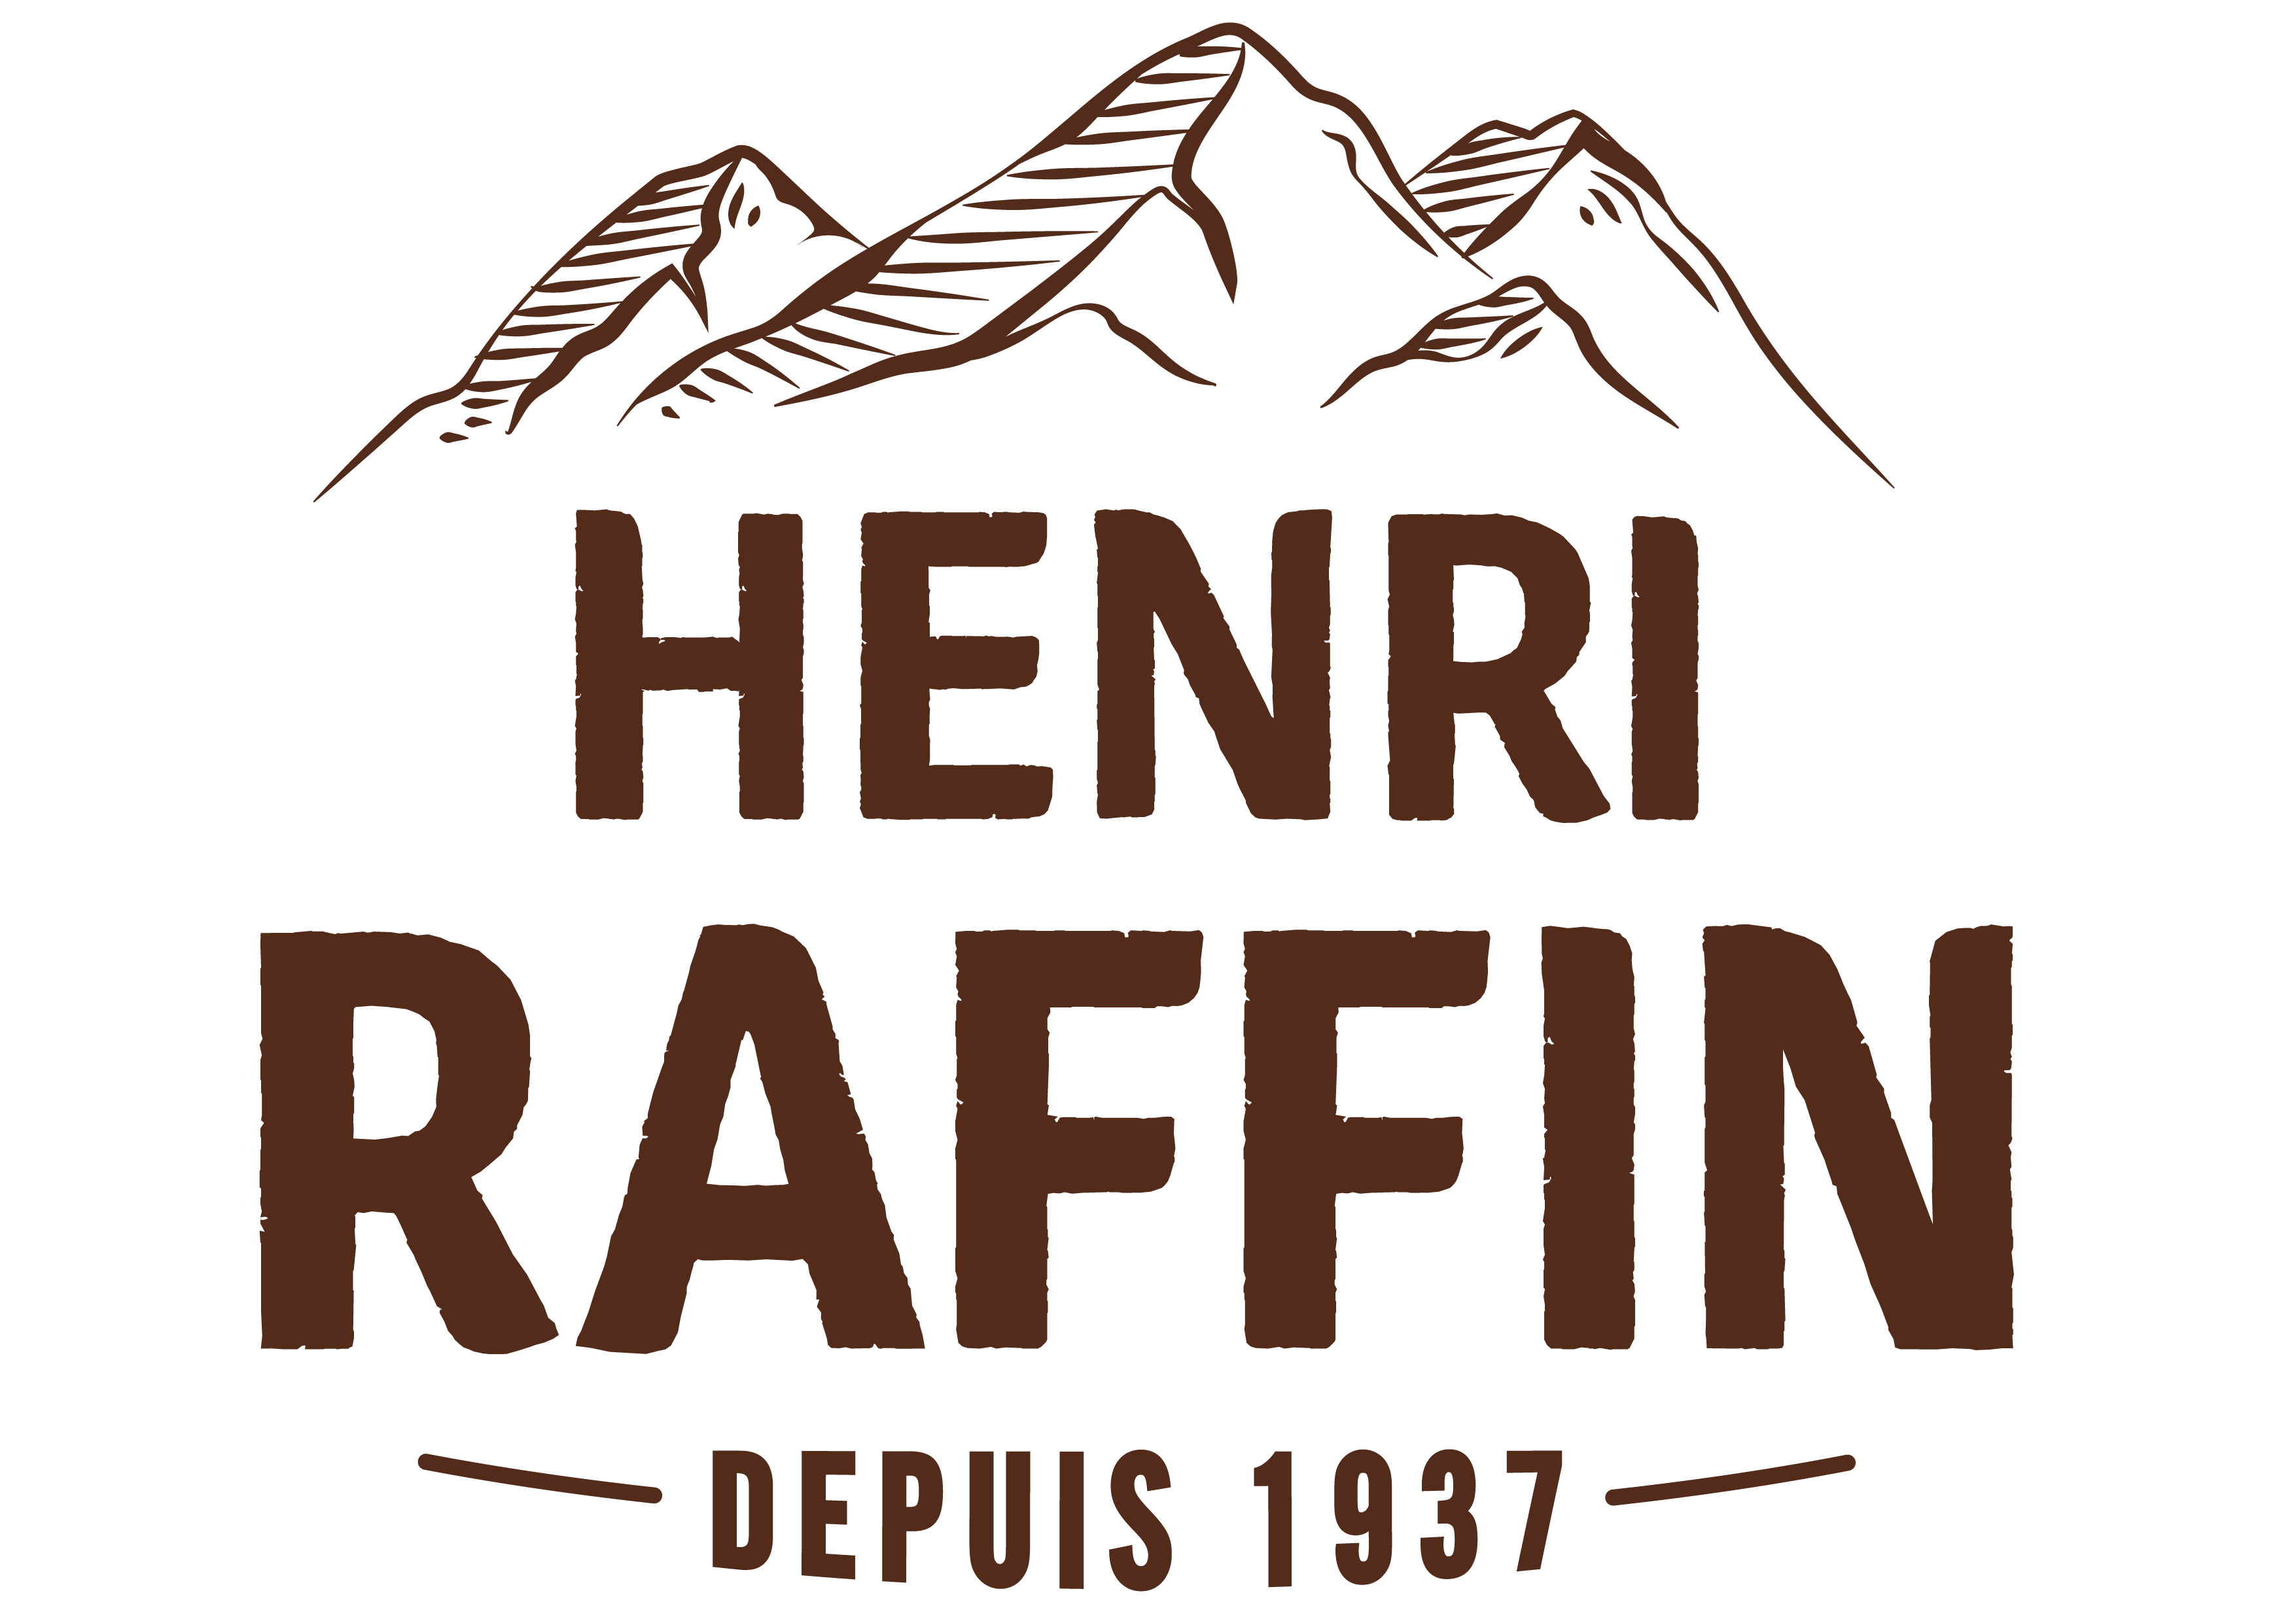 Henri Raffin